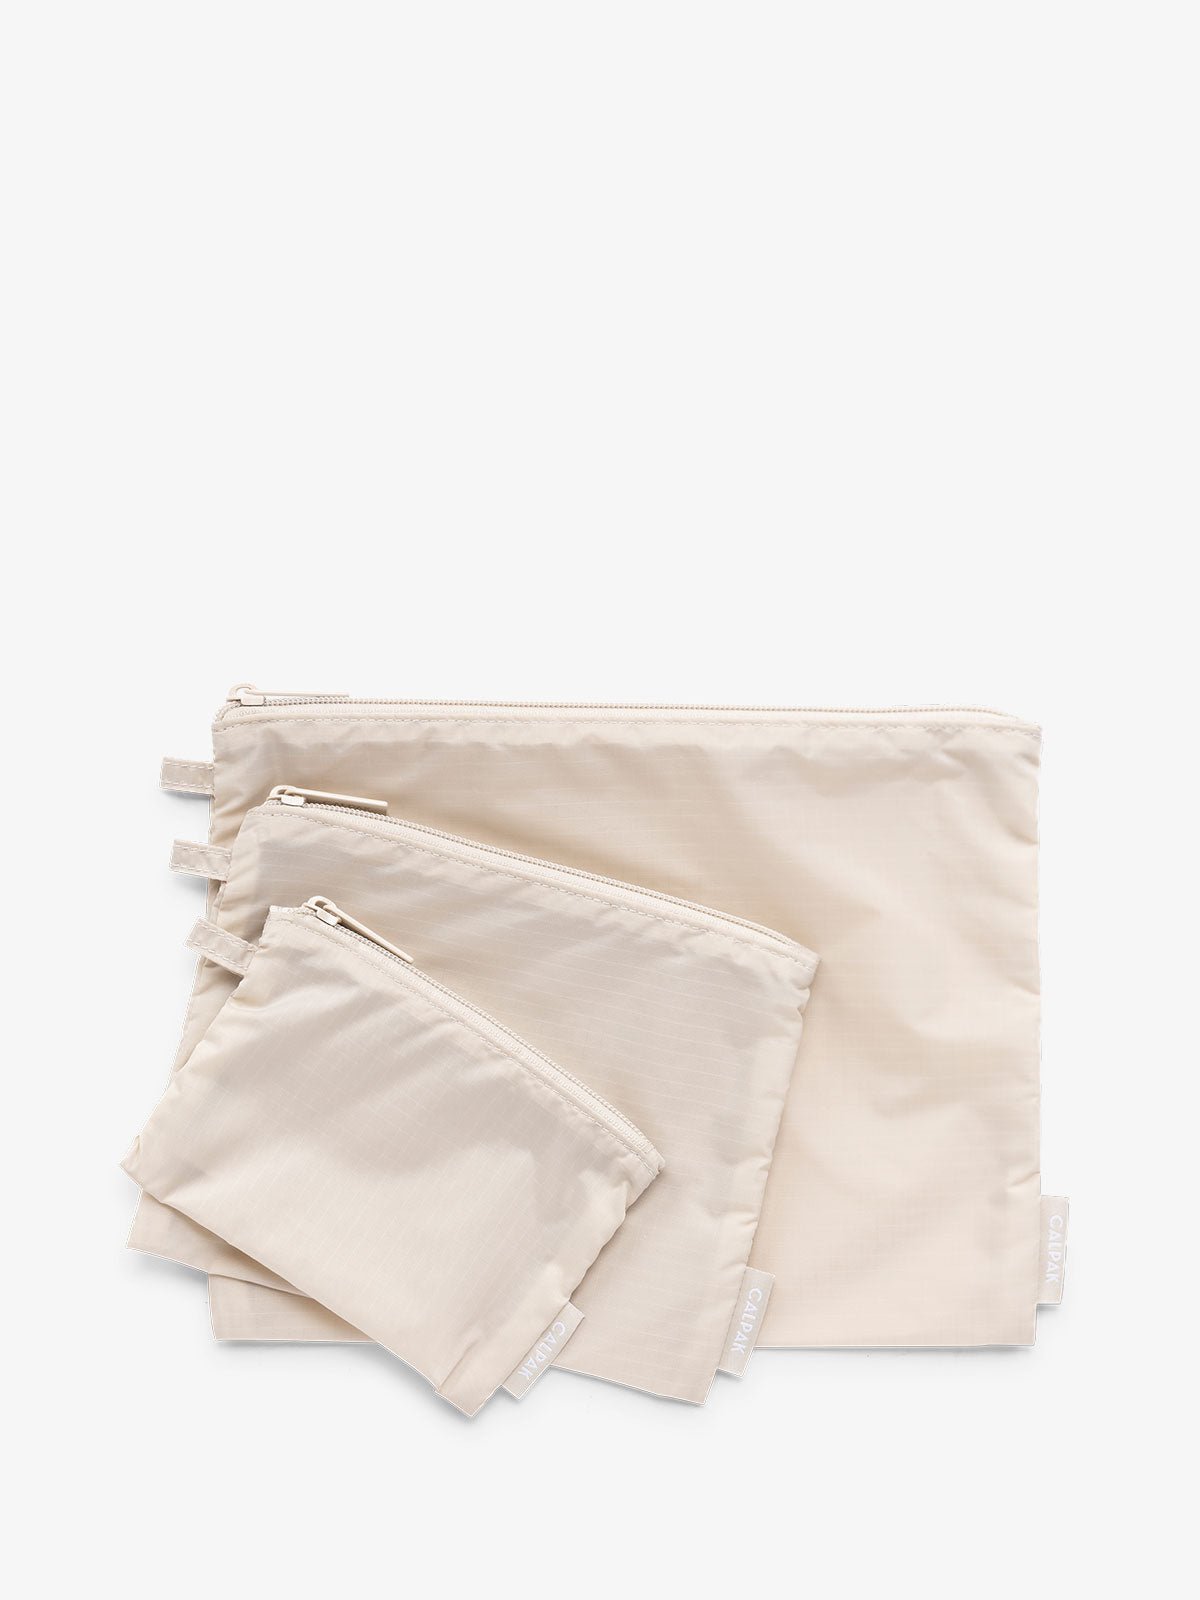 CALPAK Compakt zippered pouches in beige